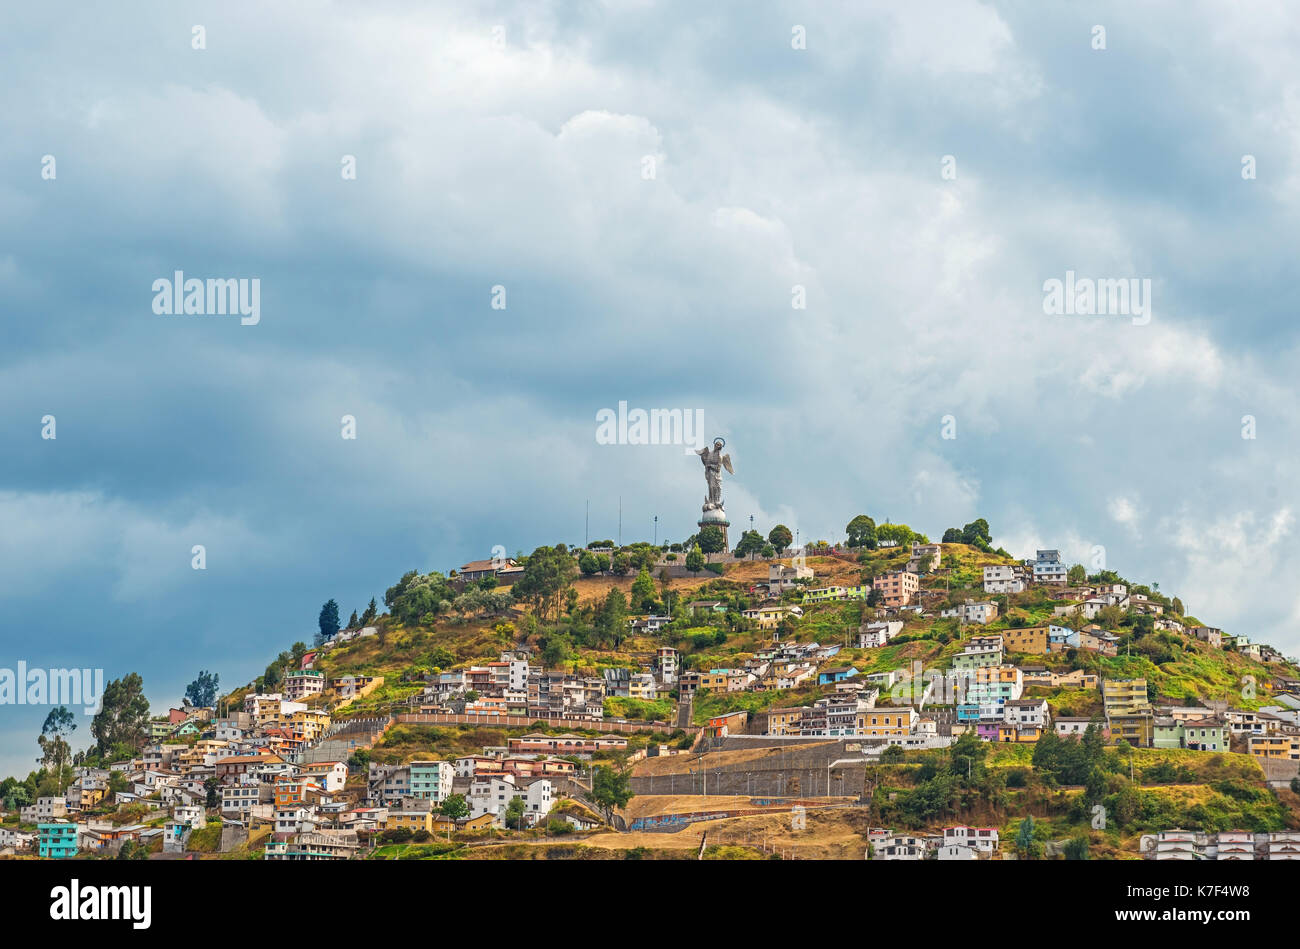 The Virgin of Quito on the Panecillo hill in the historic city center of Quito, Ecuador. Stock Photo